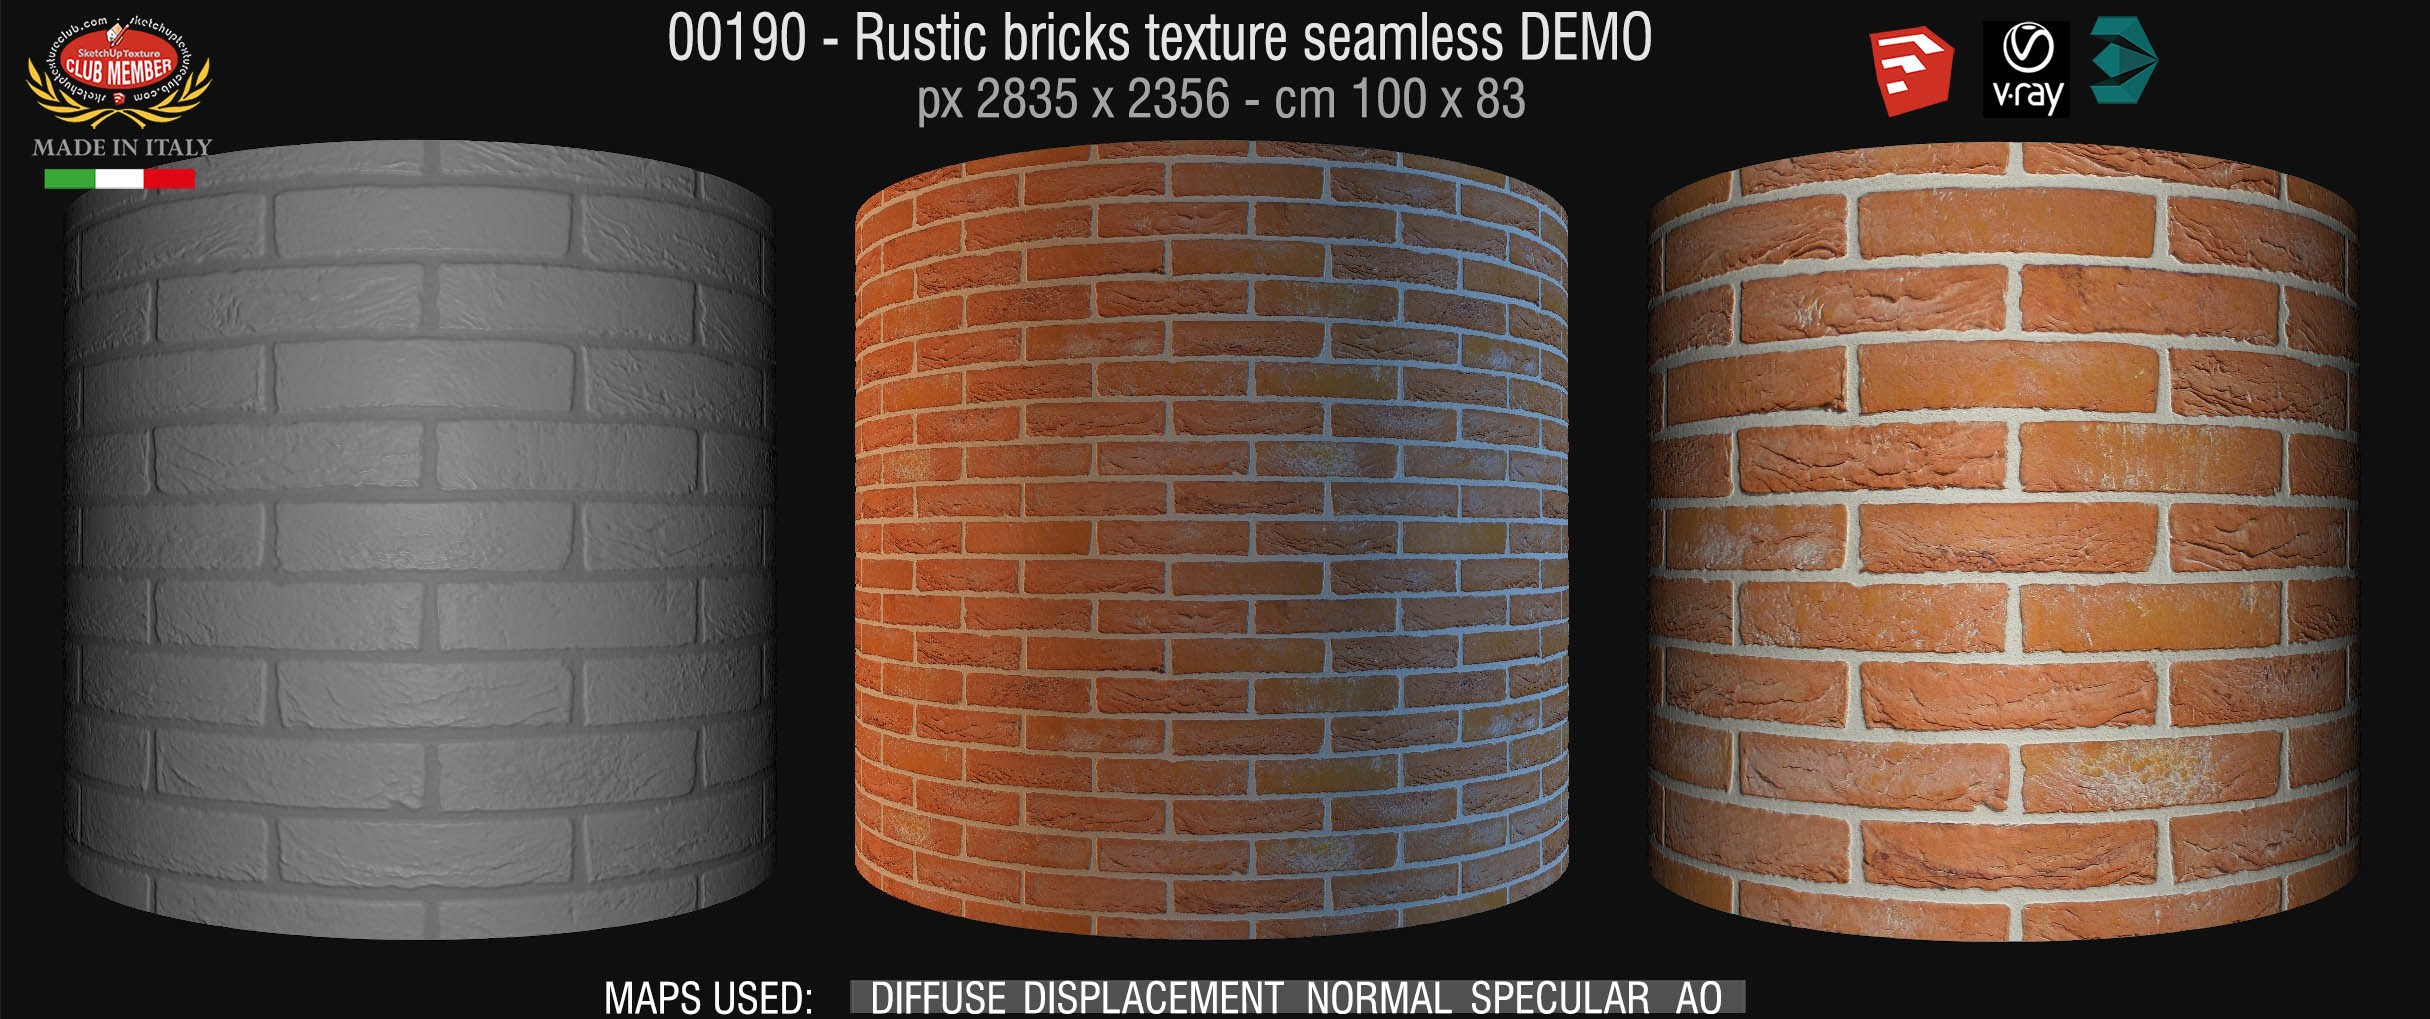 00190 Rustic bricks texture seamless + maps DEMO